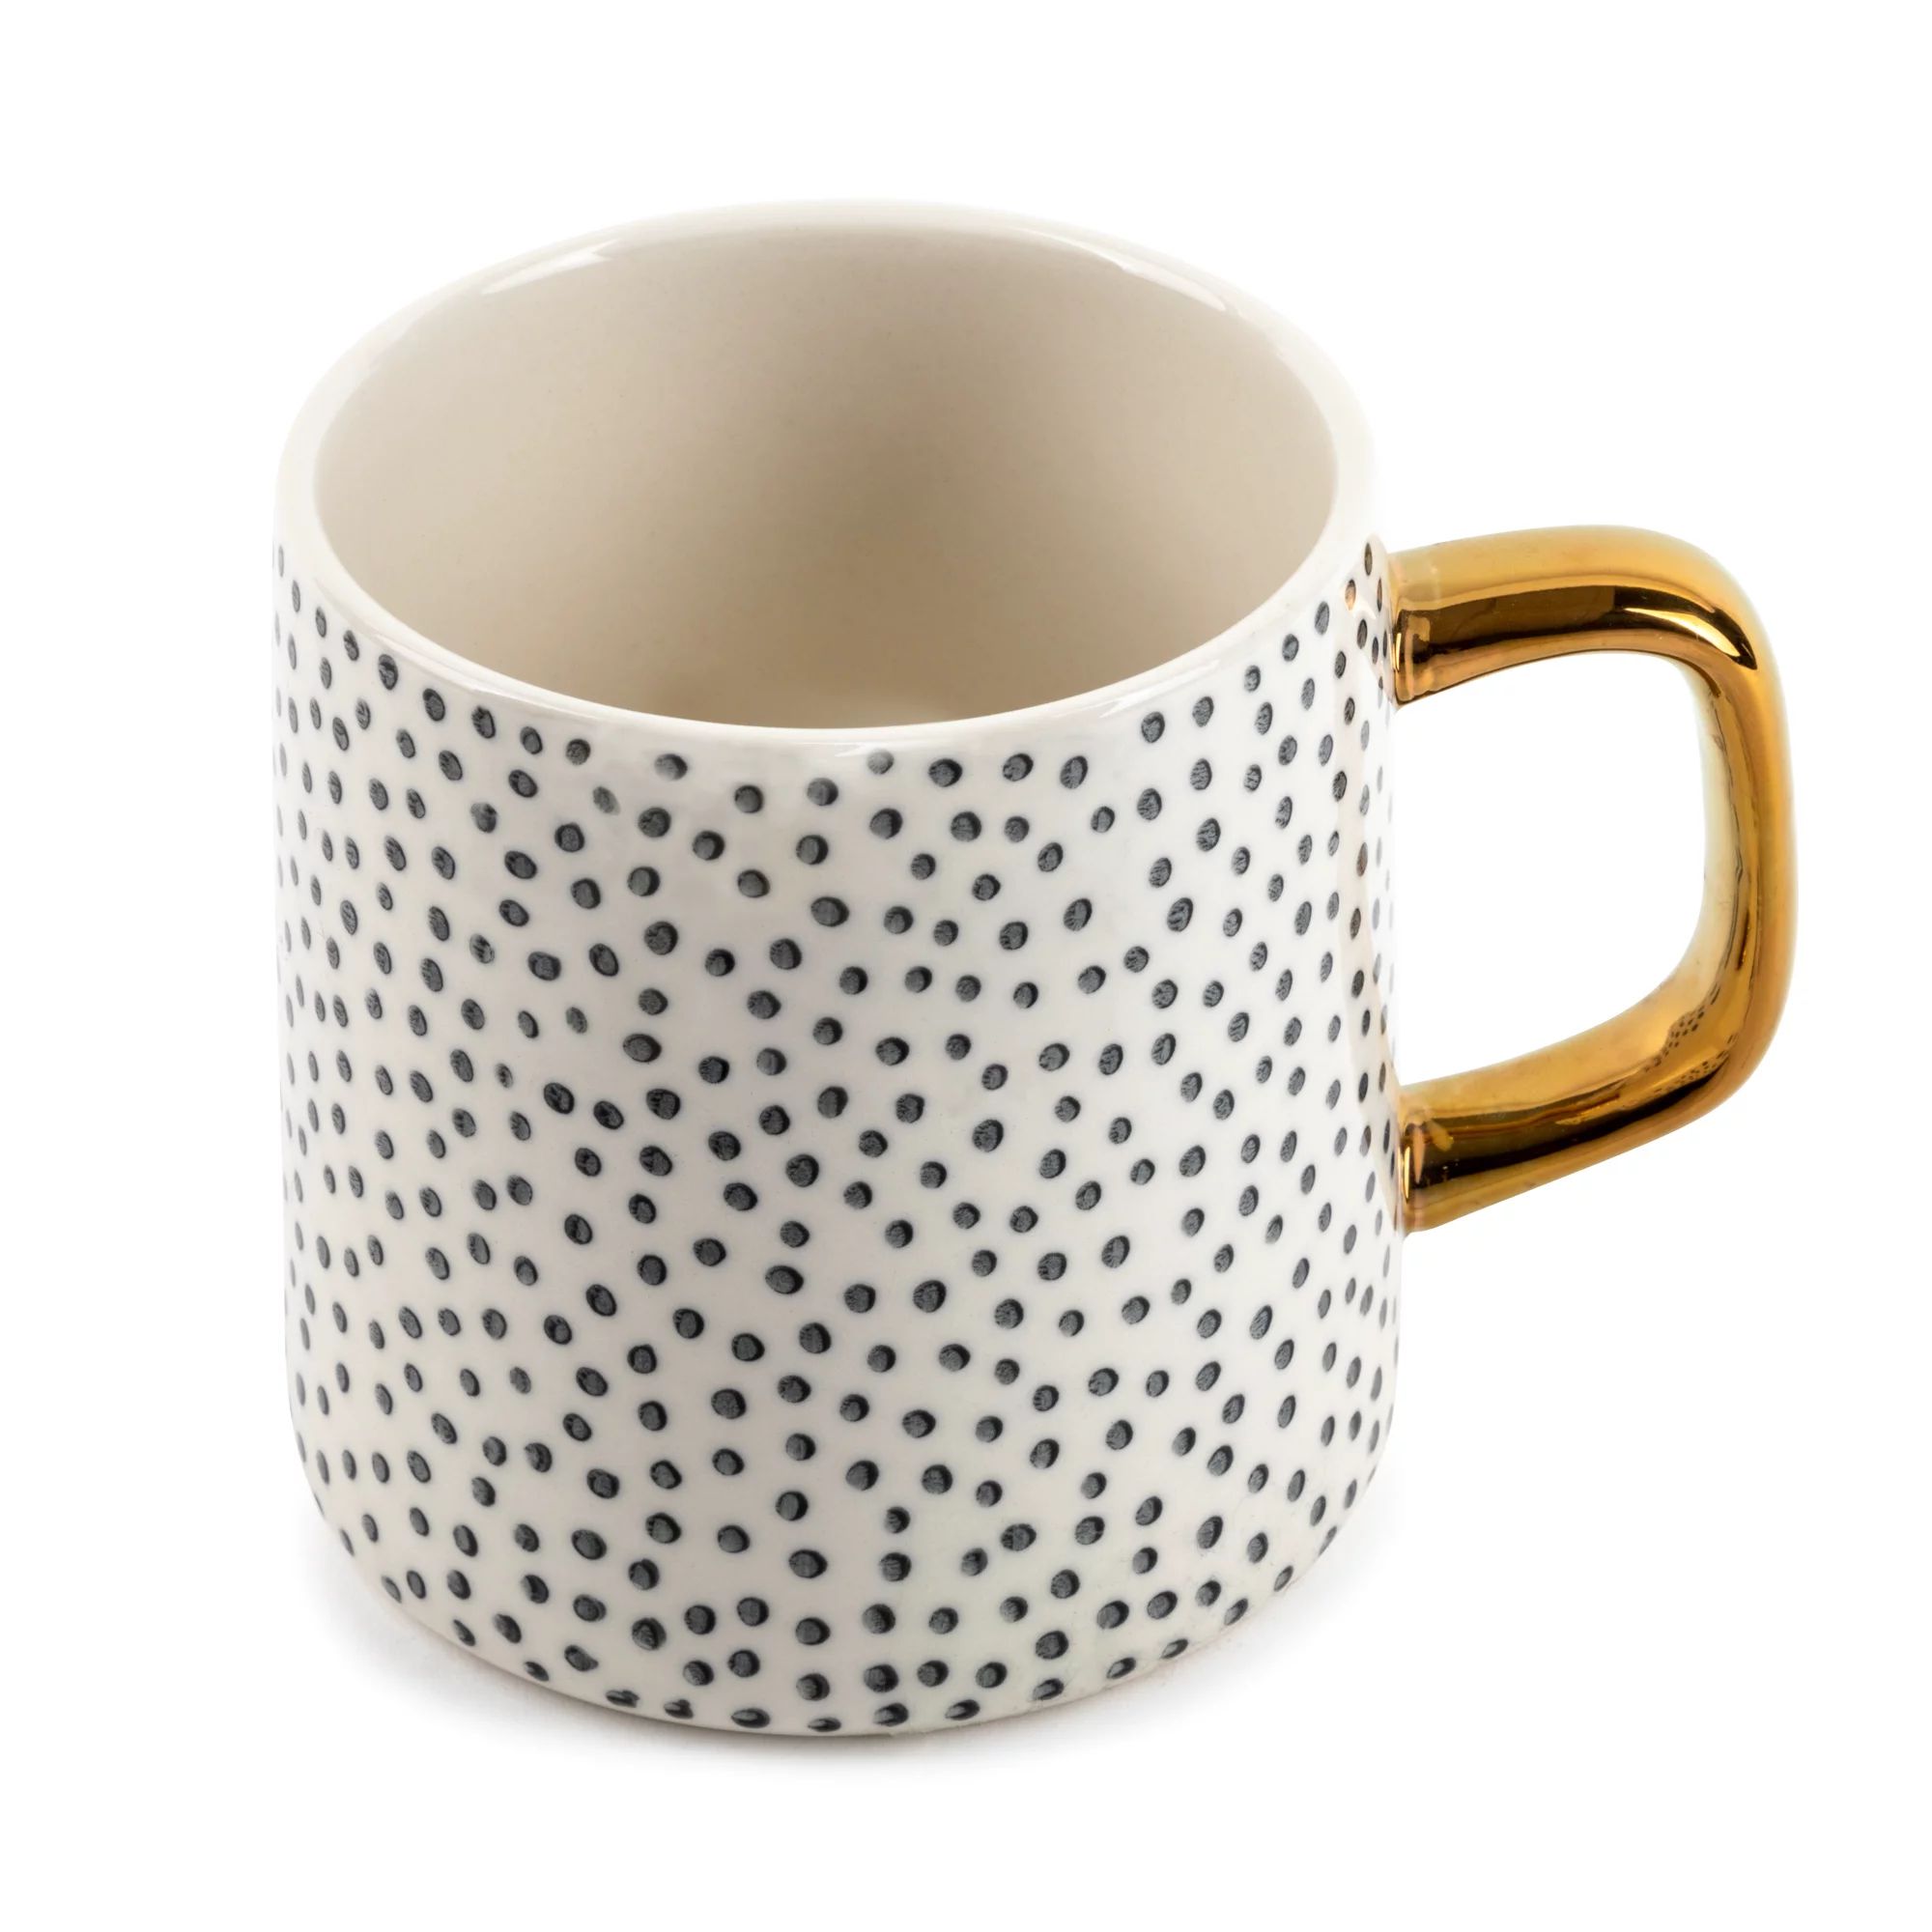 Thyme & Table Stoneware Mug, Dot - Walmart.com | Walmart (US)